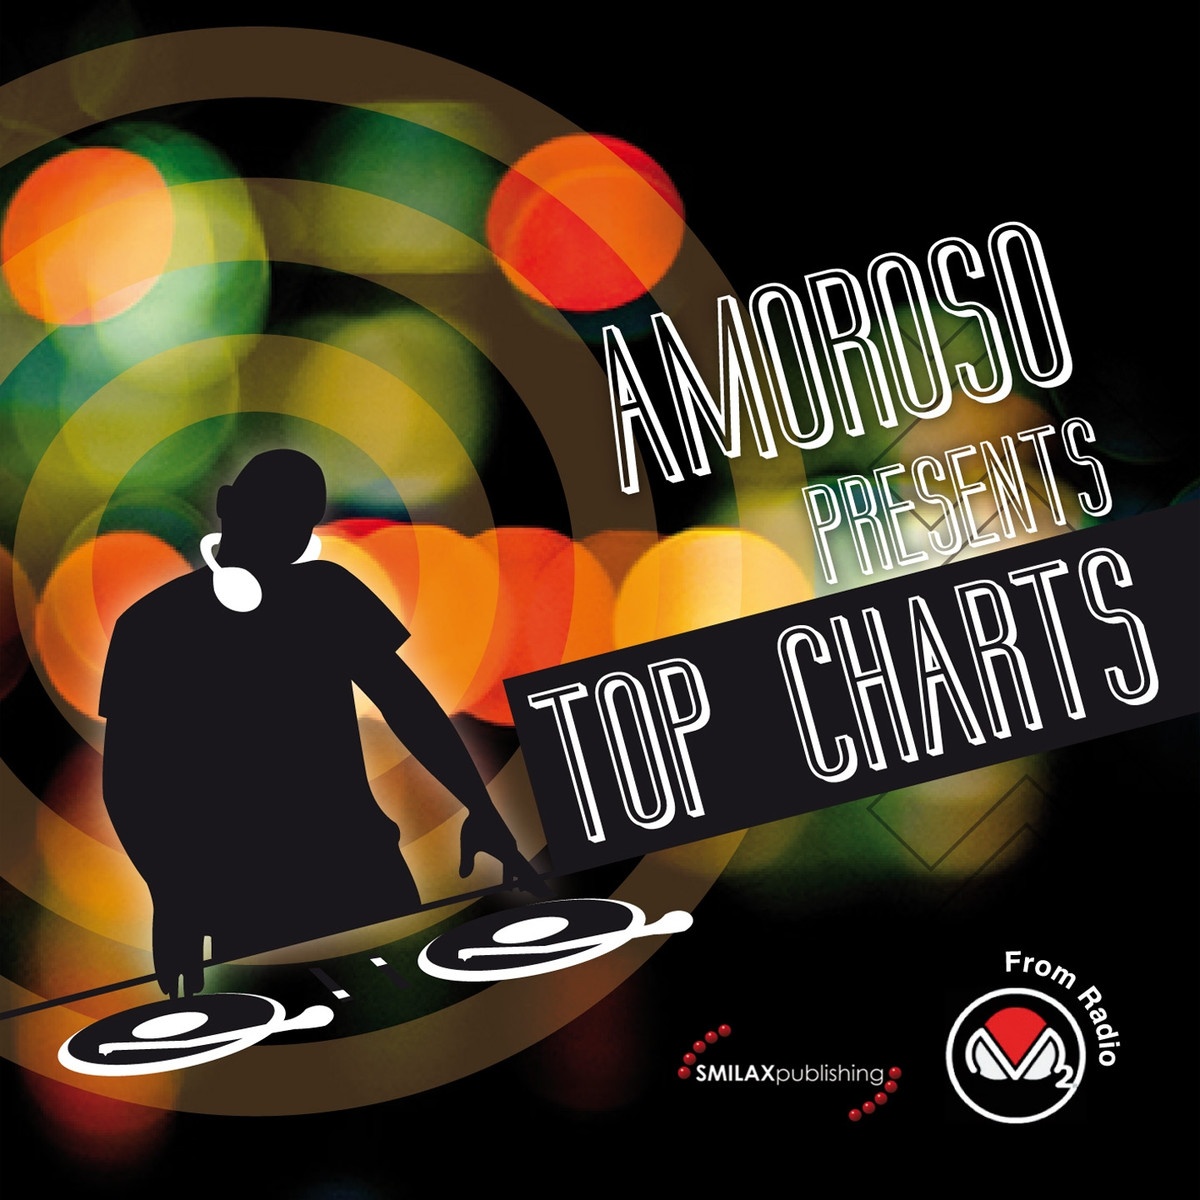 Amoroso Presents Top Chart